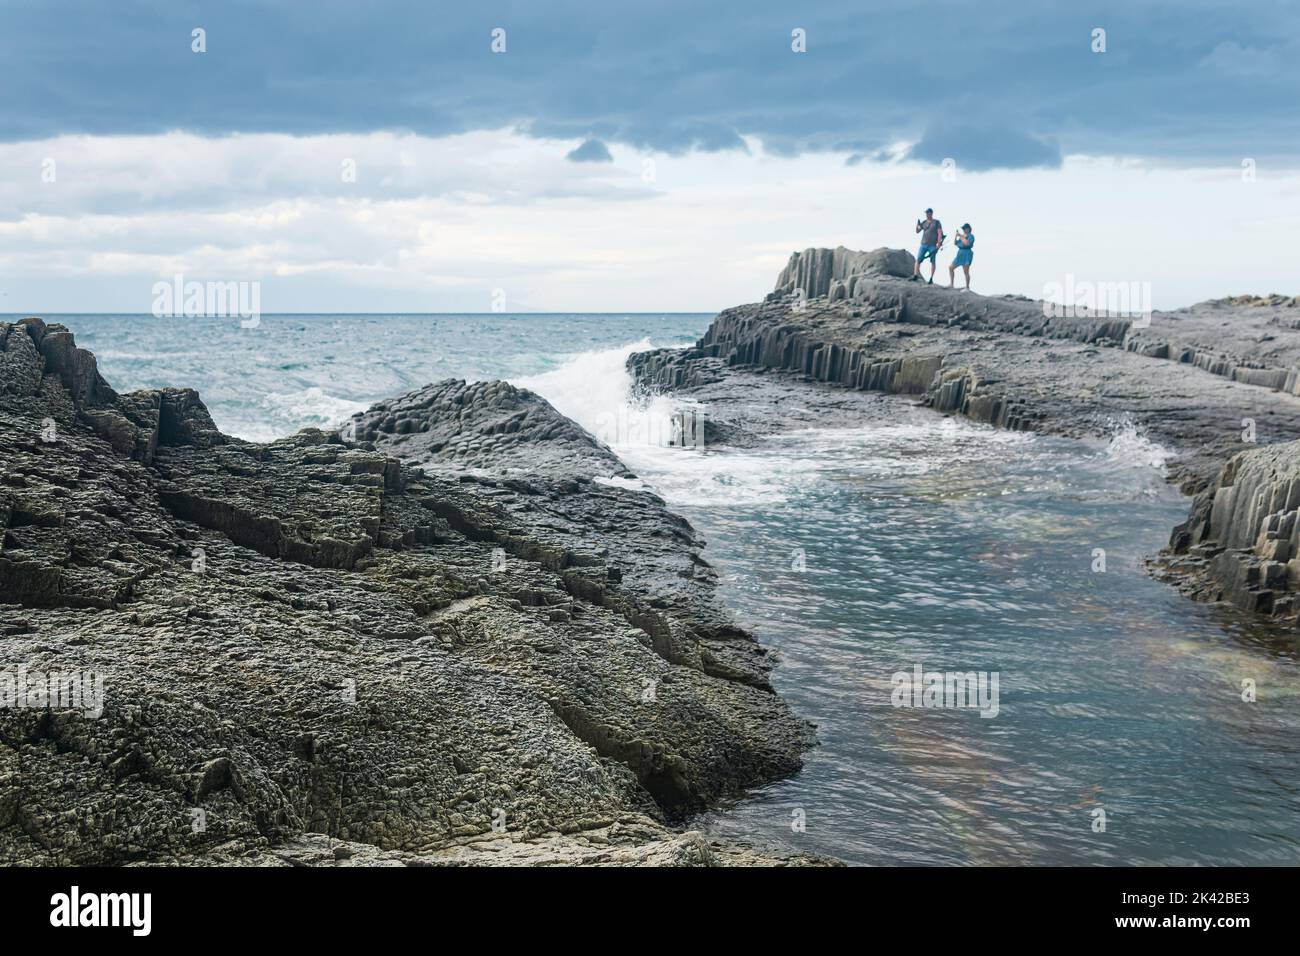 Kunashir, Russia - Juiy 31, 2022: coastal seascape with beautiful columnar basalt rocks at low tide, people is seen in the distance in blur Stock Photo